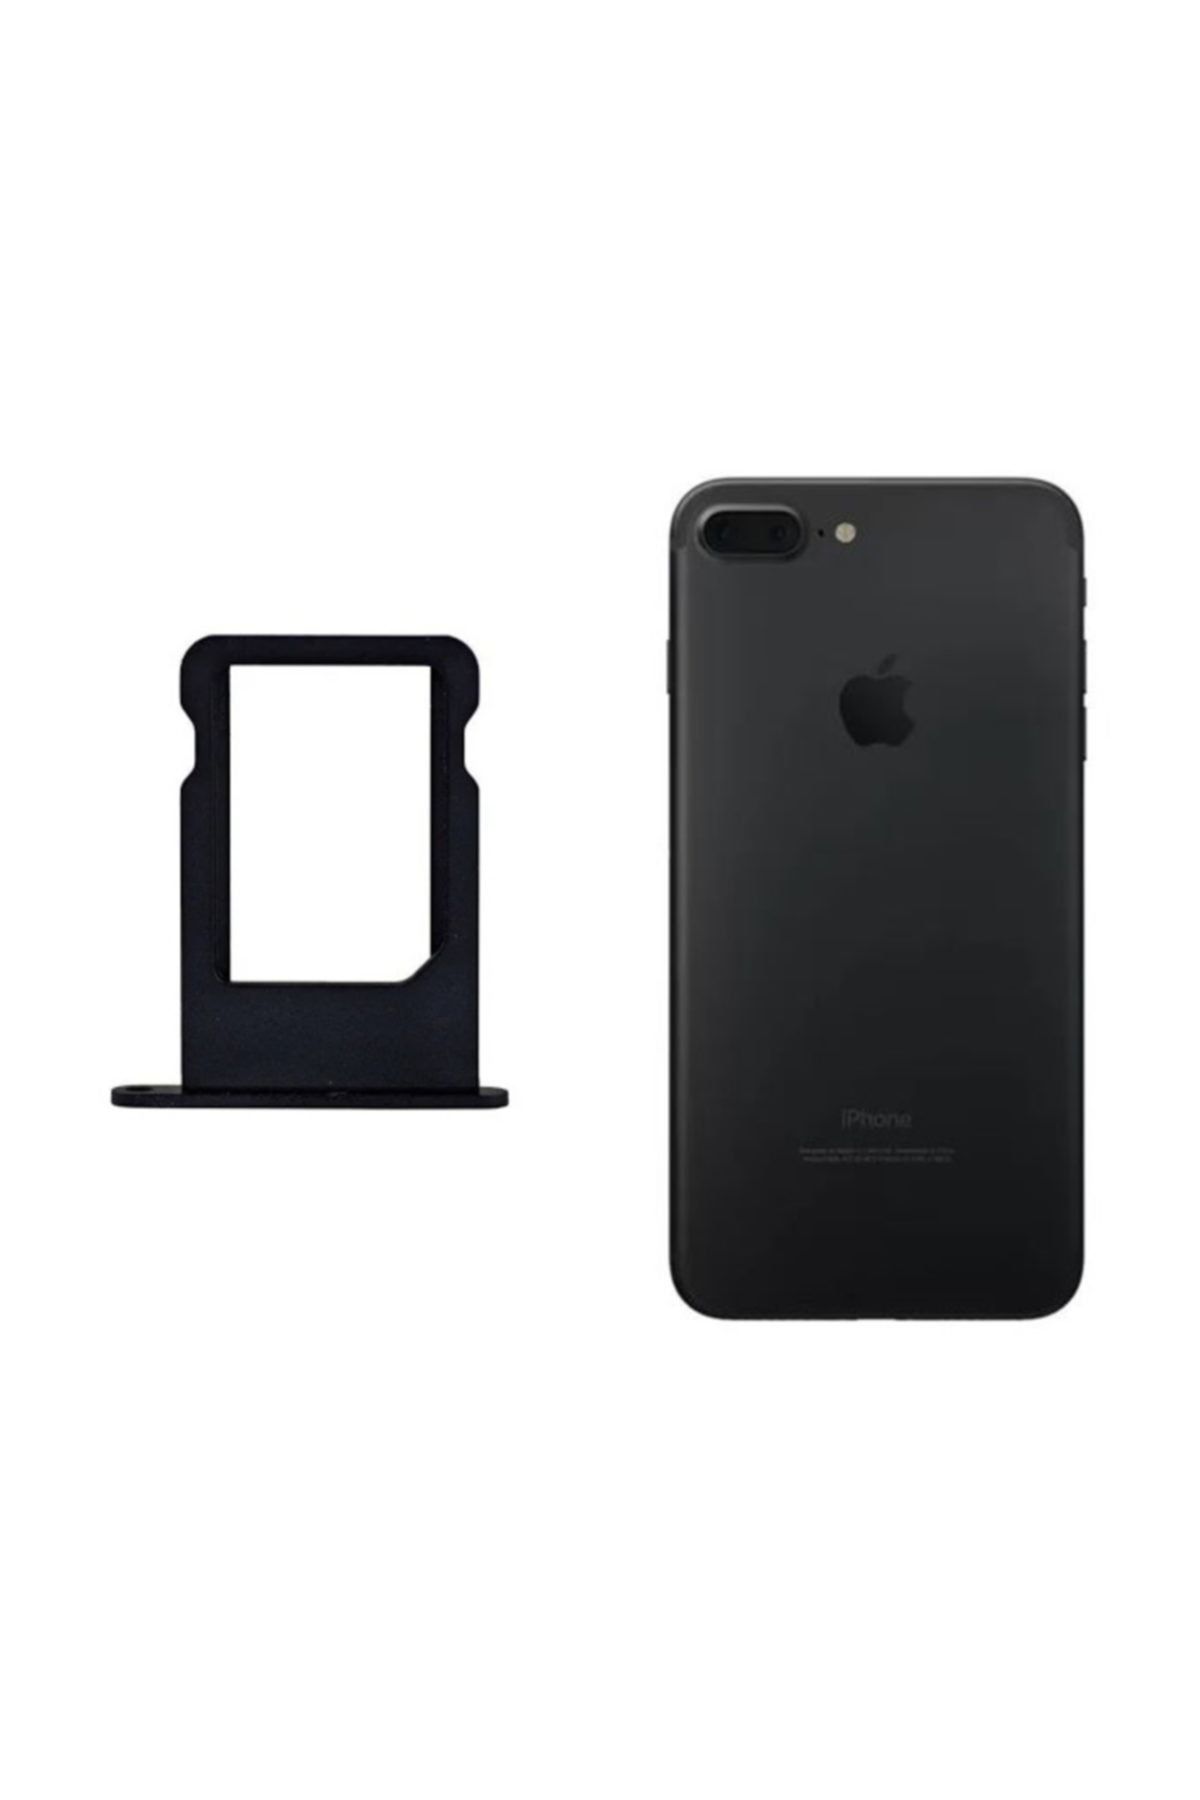 EgeTech E&t-trade Apple Iphone 7 Plus Sim Kart Kapak Aparatı Metal Çekmece - Siyah